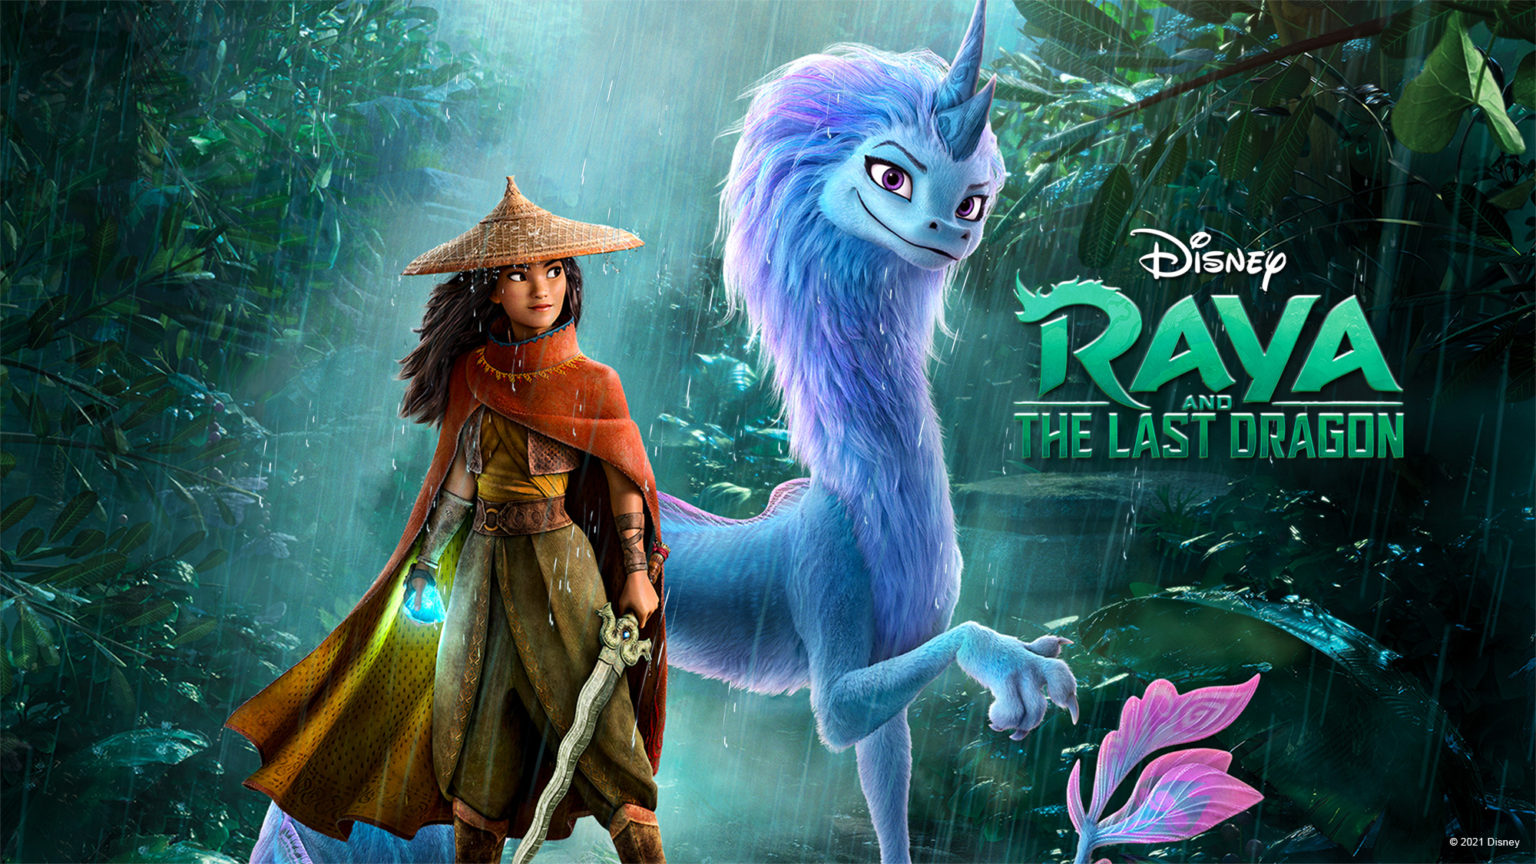 The new raya and the last dragon movie - bunnyfad